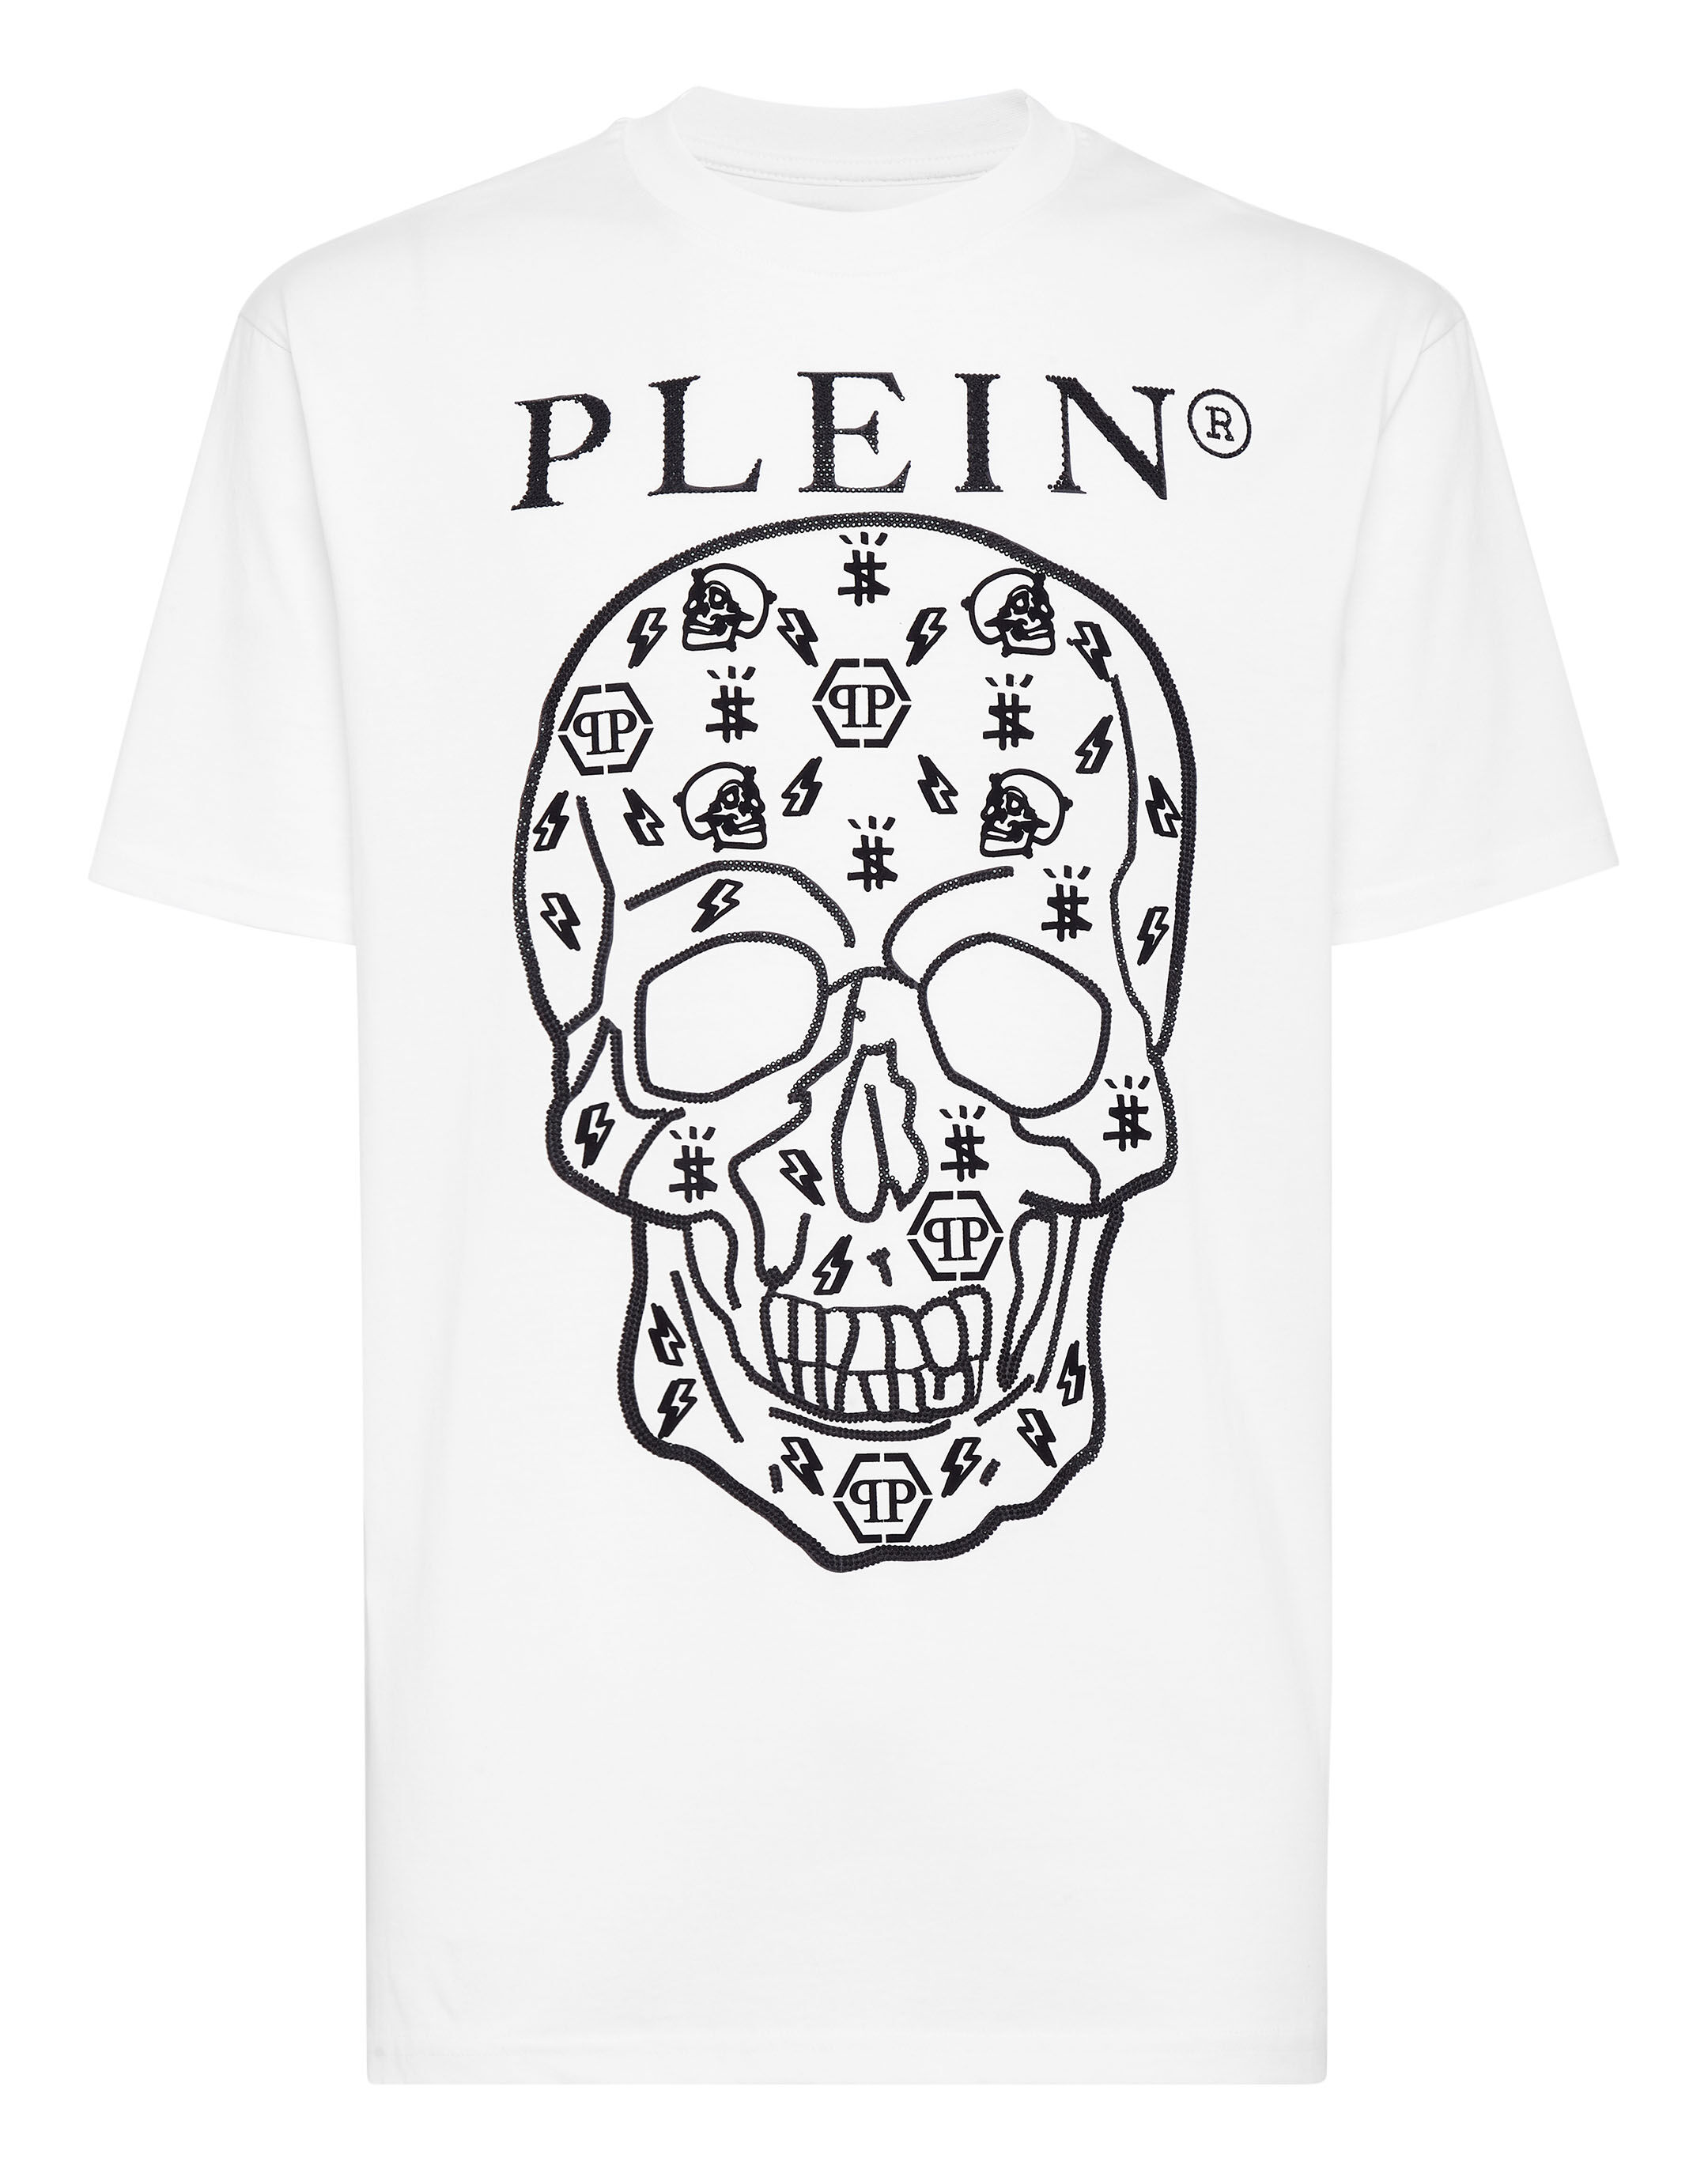 PHILIPP PLEIN Men Sport T-Shirt Skull Short Sleeve Tee Fitness Tops M-3XL 9999 